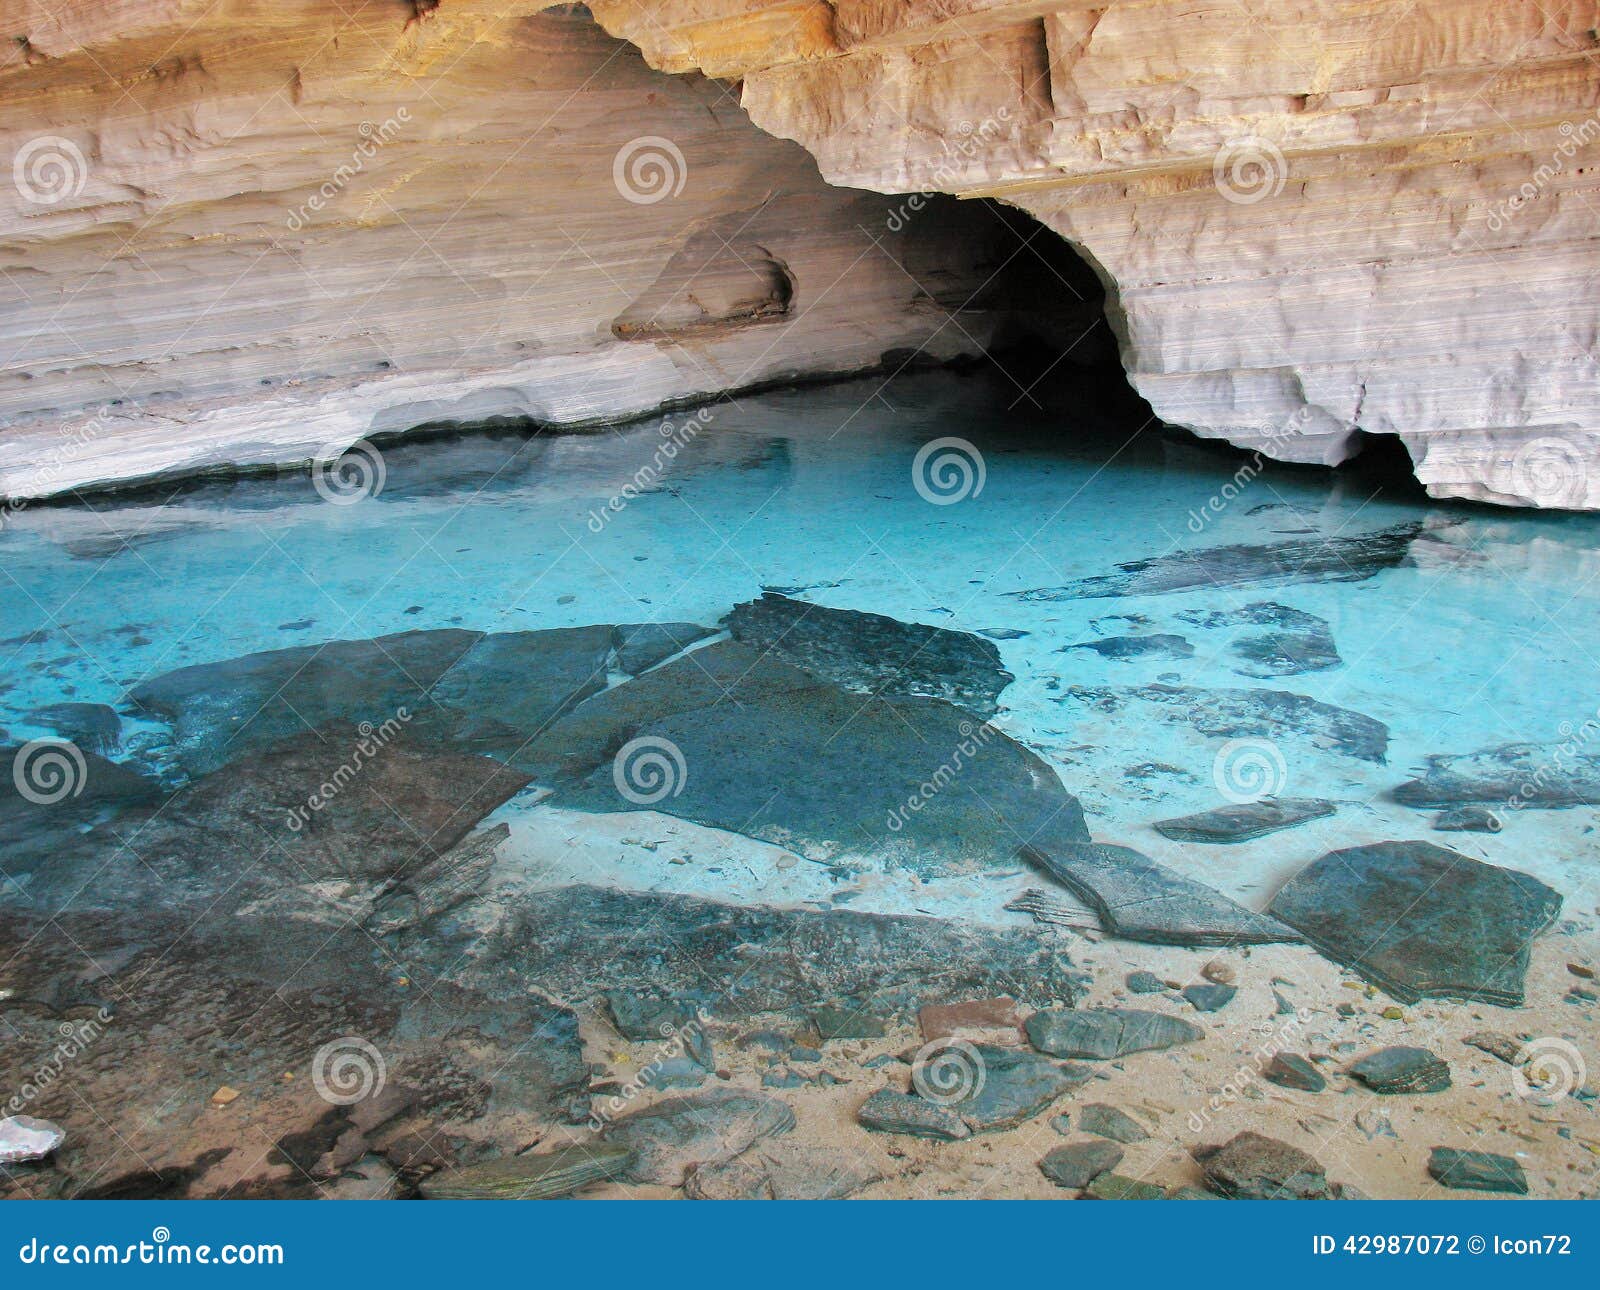 gruta azul (blue cave) in chapada diamantina, brazil.